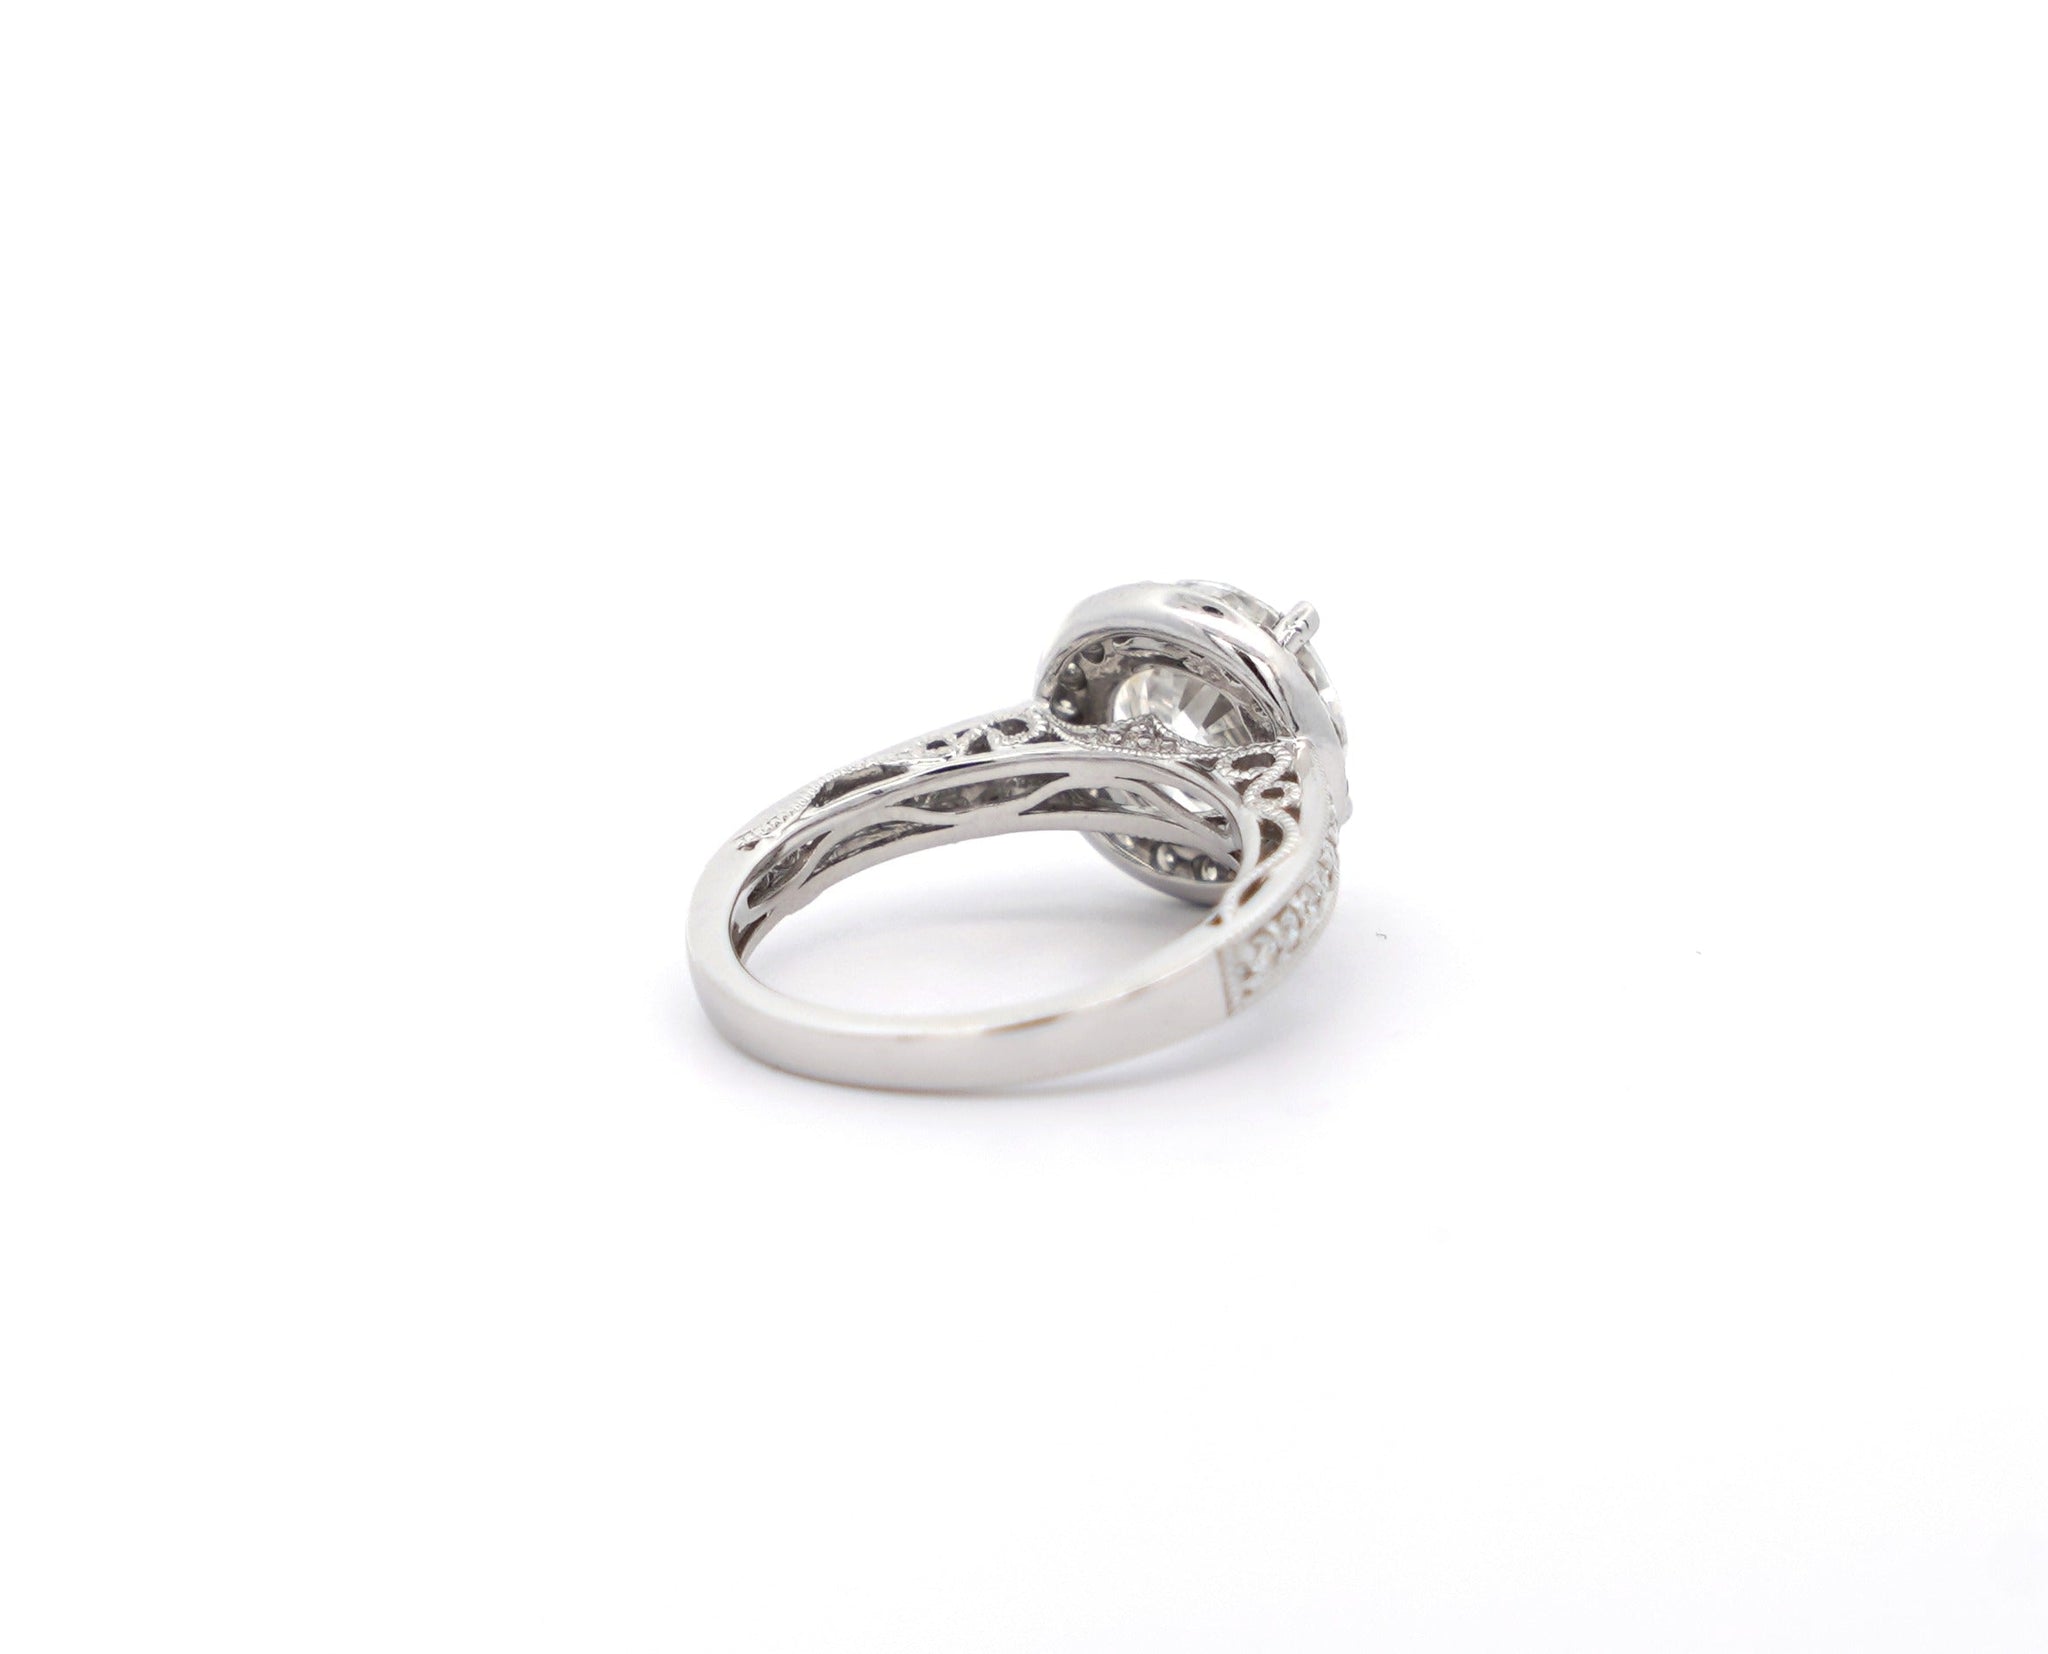 IGI Certified 3.25 Carat Lab Grown Diamond Engagement Ring With Diamond Halo and Regal 18K White Gold Ring Setting